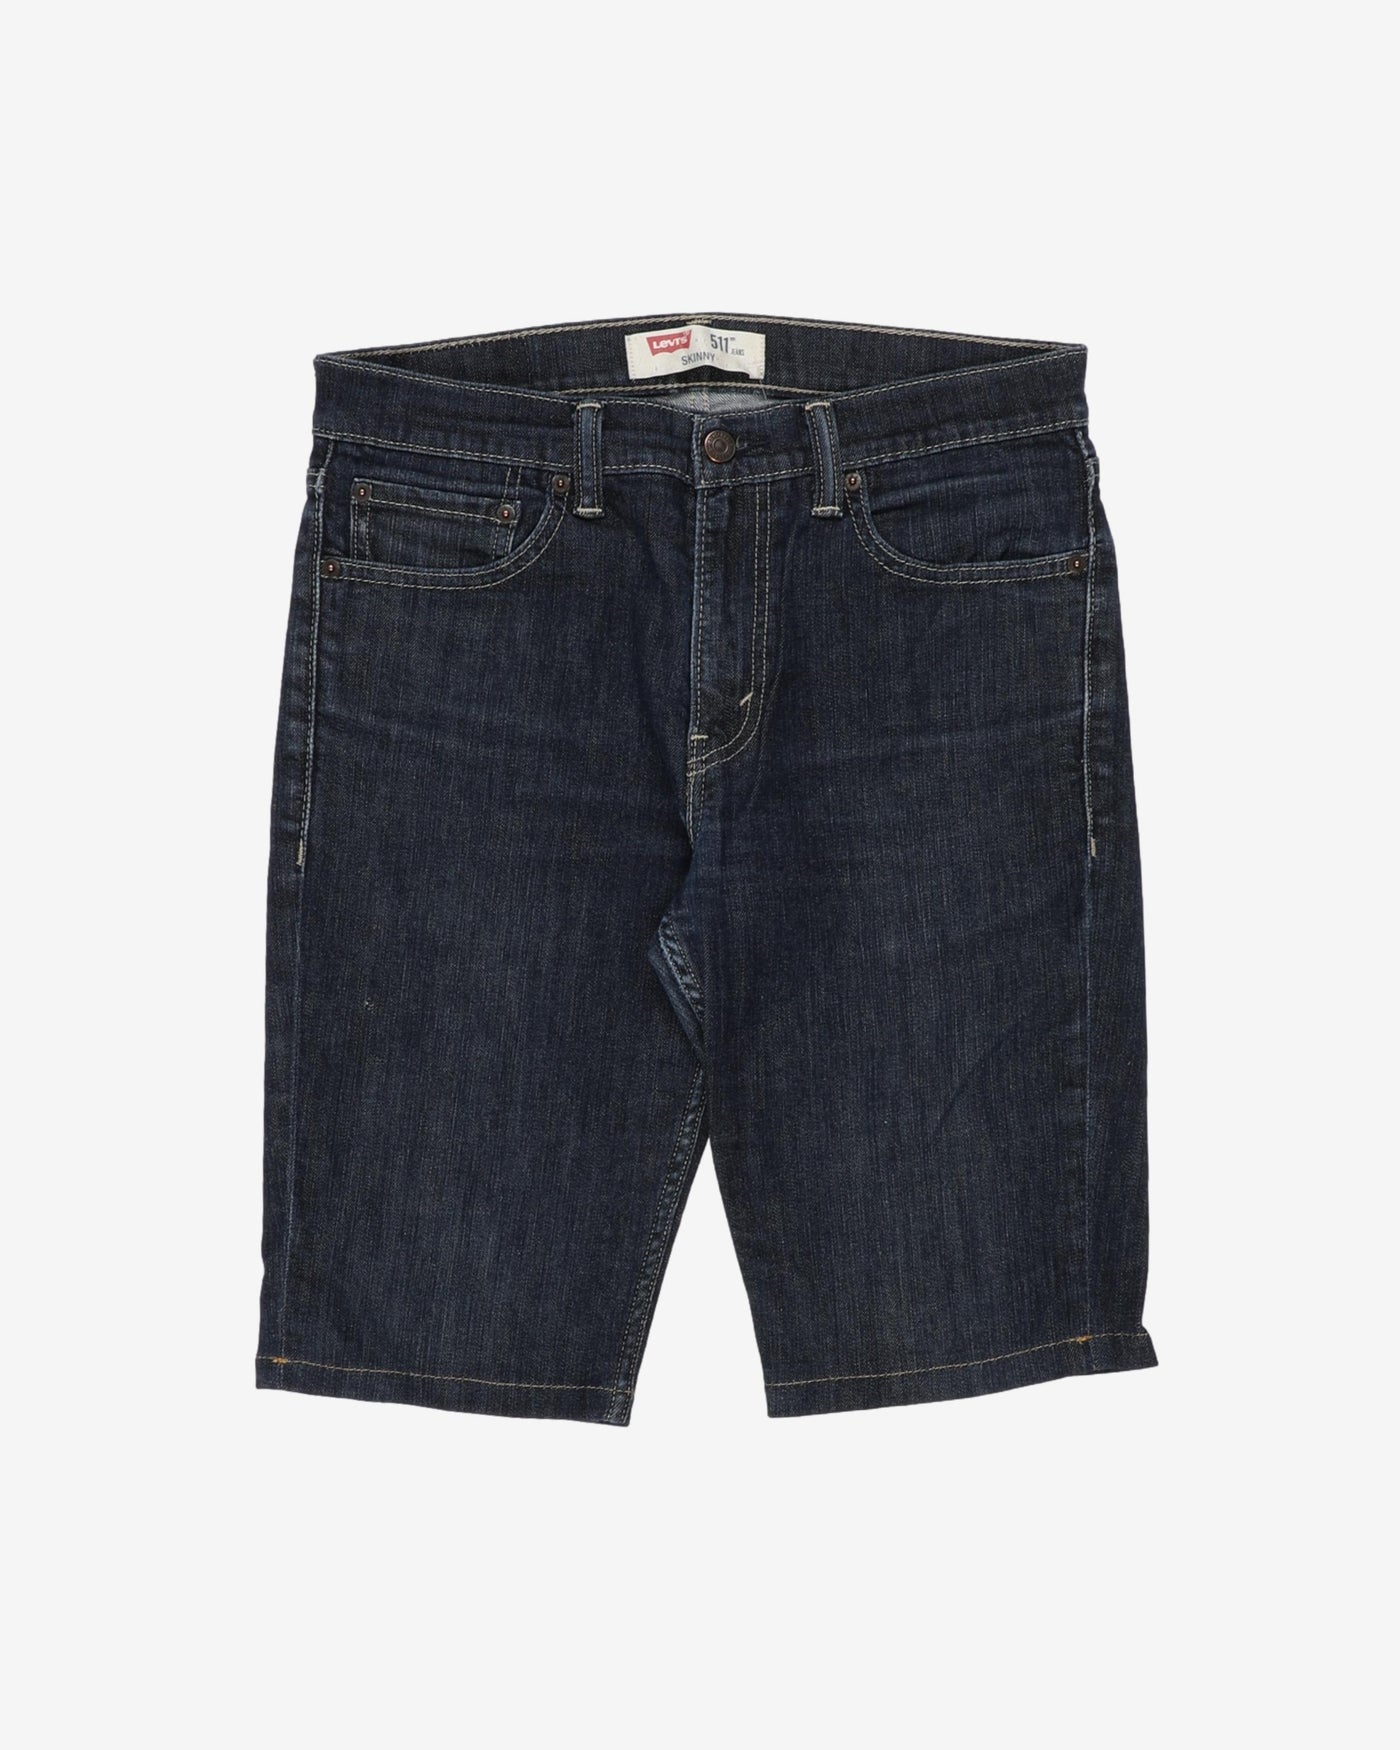 Levi's 511 Dark Blue Skinny Denim Jean Shorts - W32